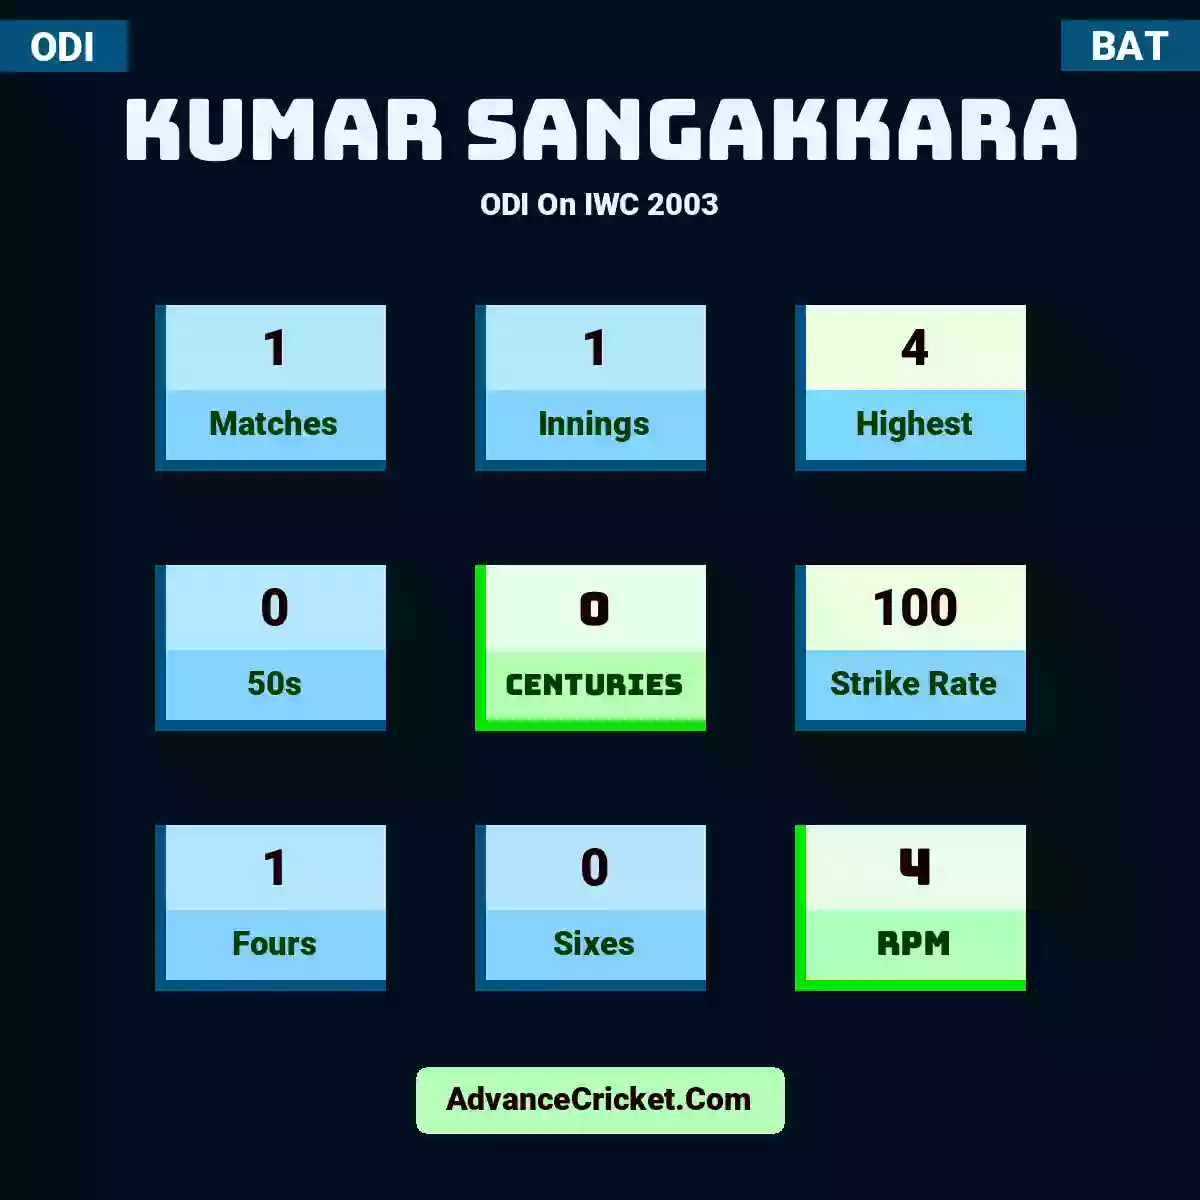 Kumar Sangakkara ODI  On IWC 2003, Kumar Sangakkara played 1 matches, scored 4 runs as highest, 0 half-centuries, and 0 centuries, with a strike rate of 100. K.Sangakkara hit 1 fours and 0 sixes, with an RPM of 4.